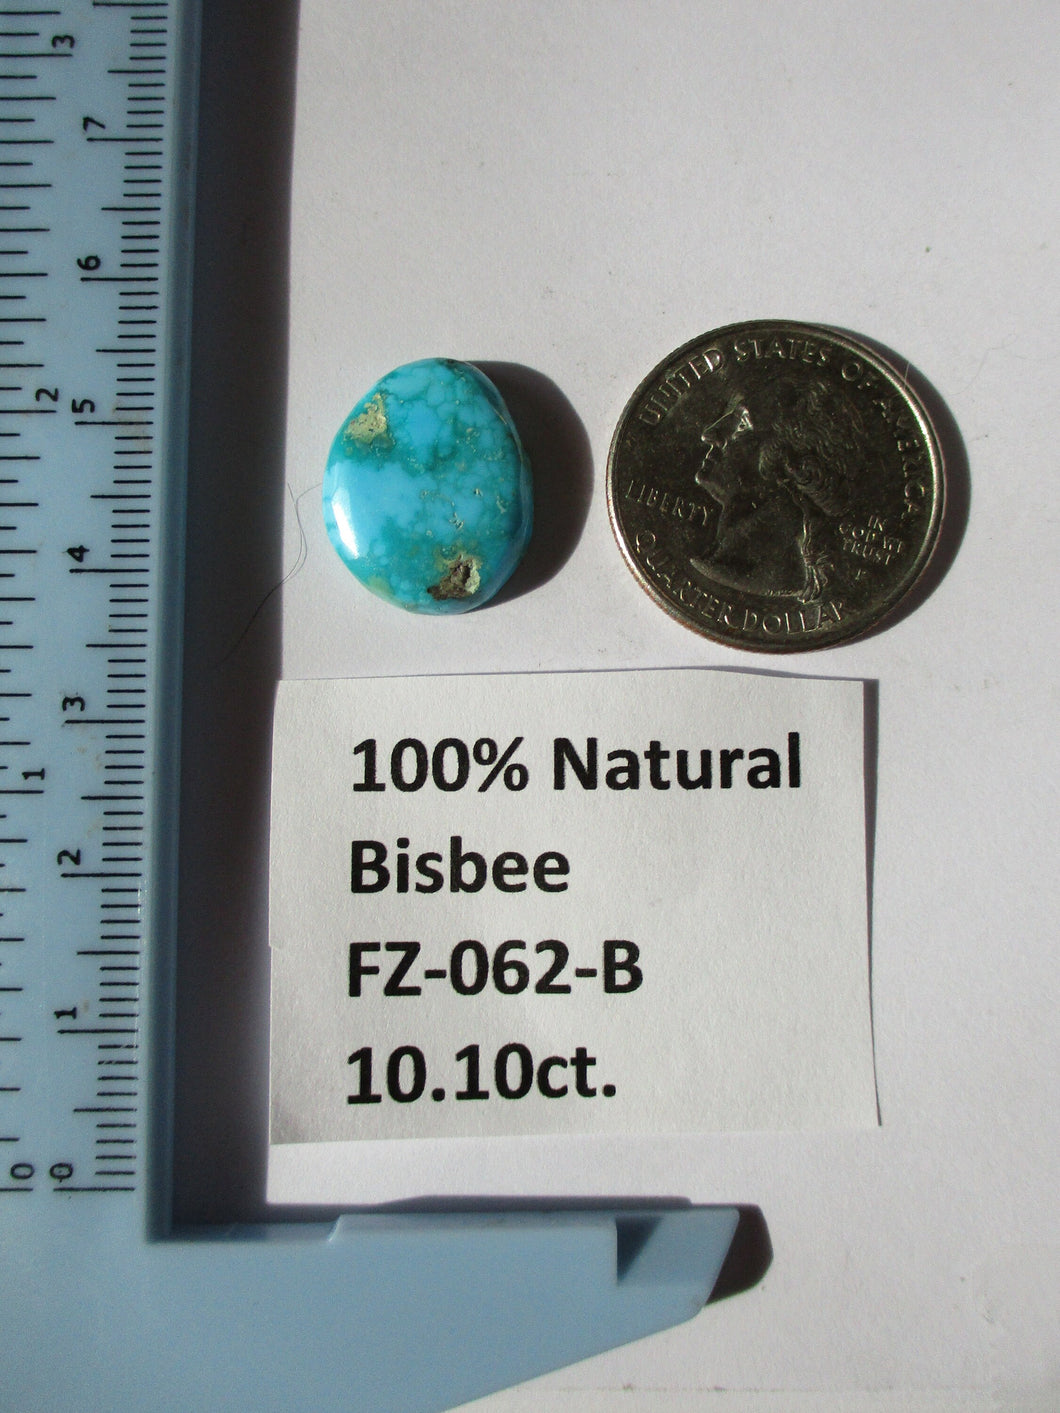 10.1 ct. (18x15x4 mm) 100% Natural Bisbee Turquoise, Cabochon Gemstones, # FZ 062